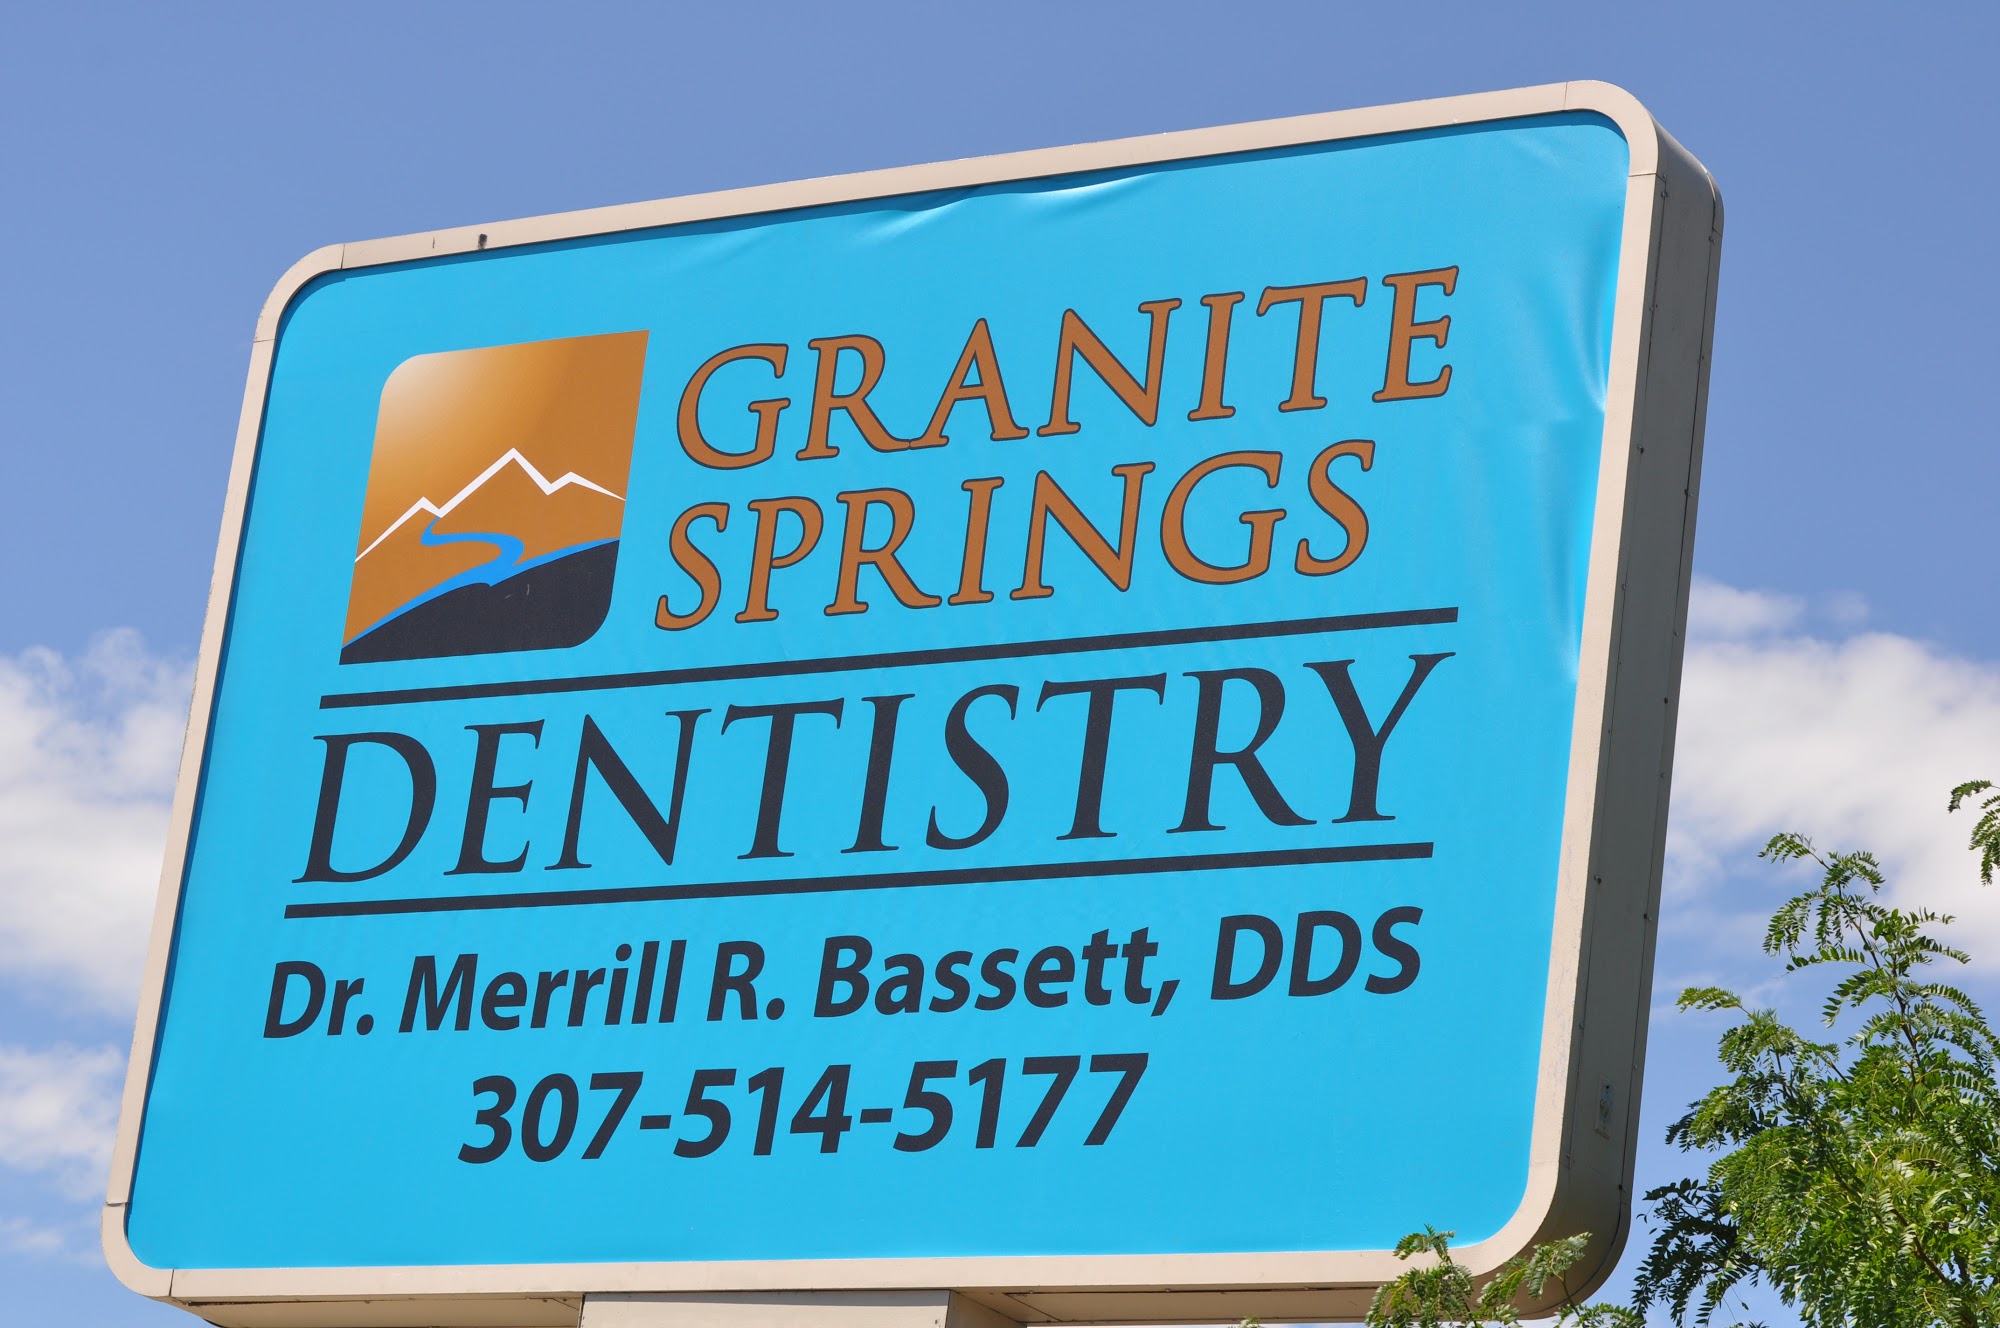 Granite Springs Dentistry